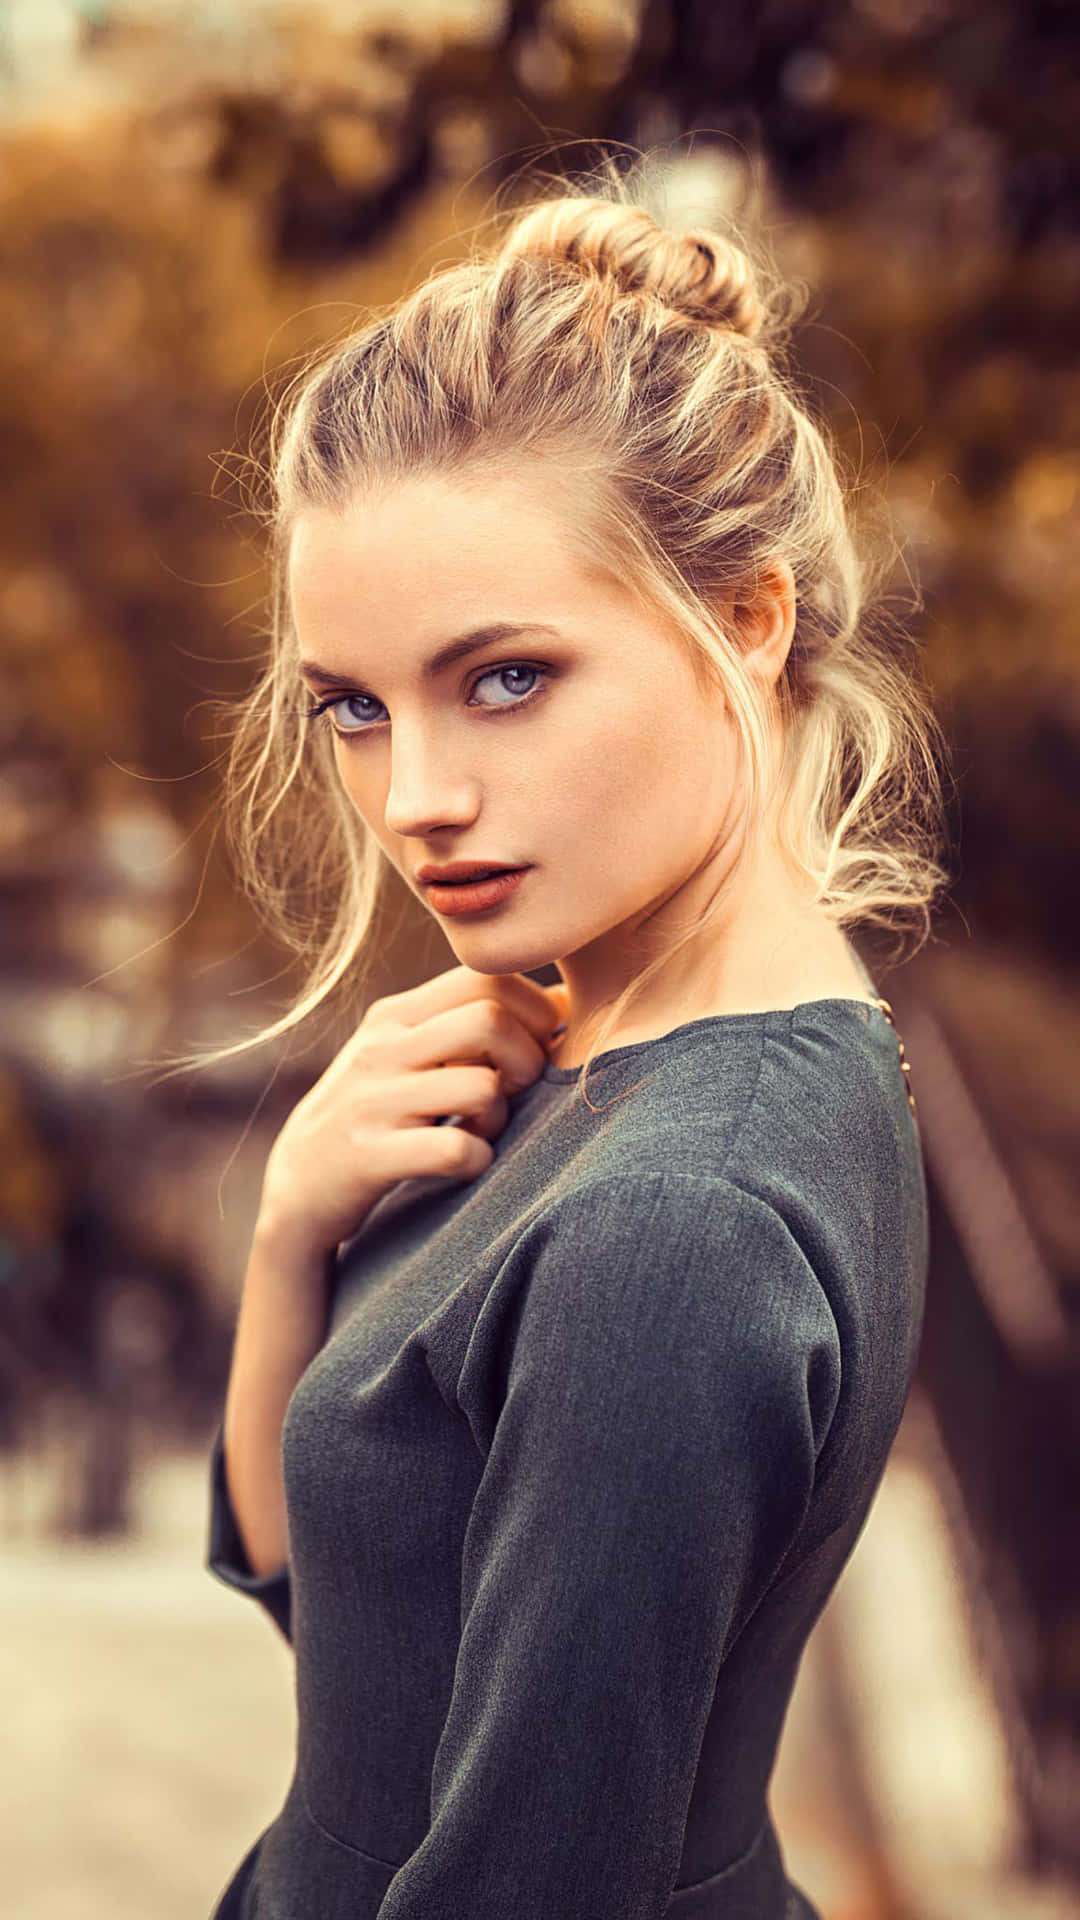 Young Female Model Striking Pose Wallpaper